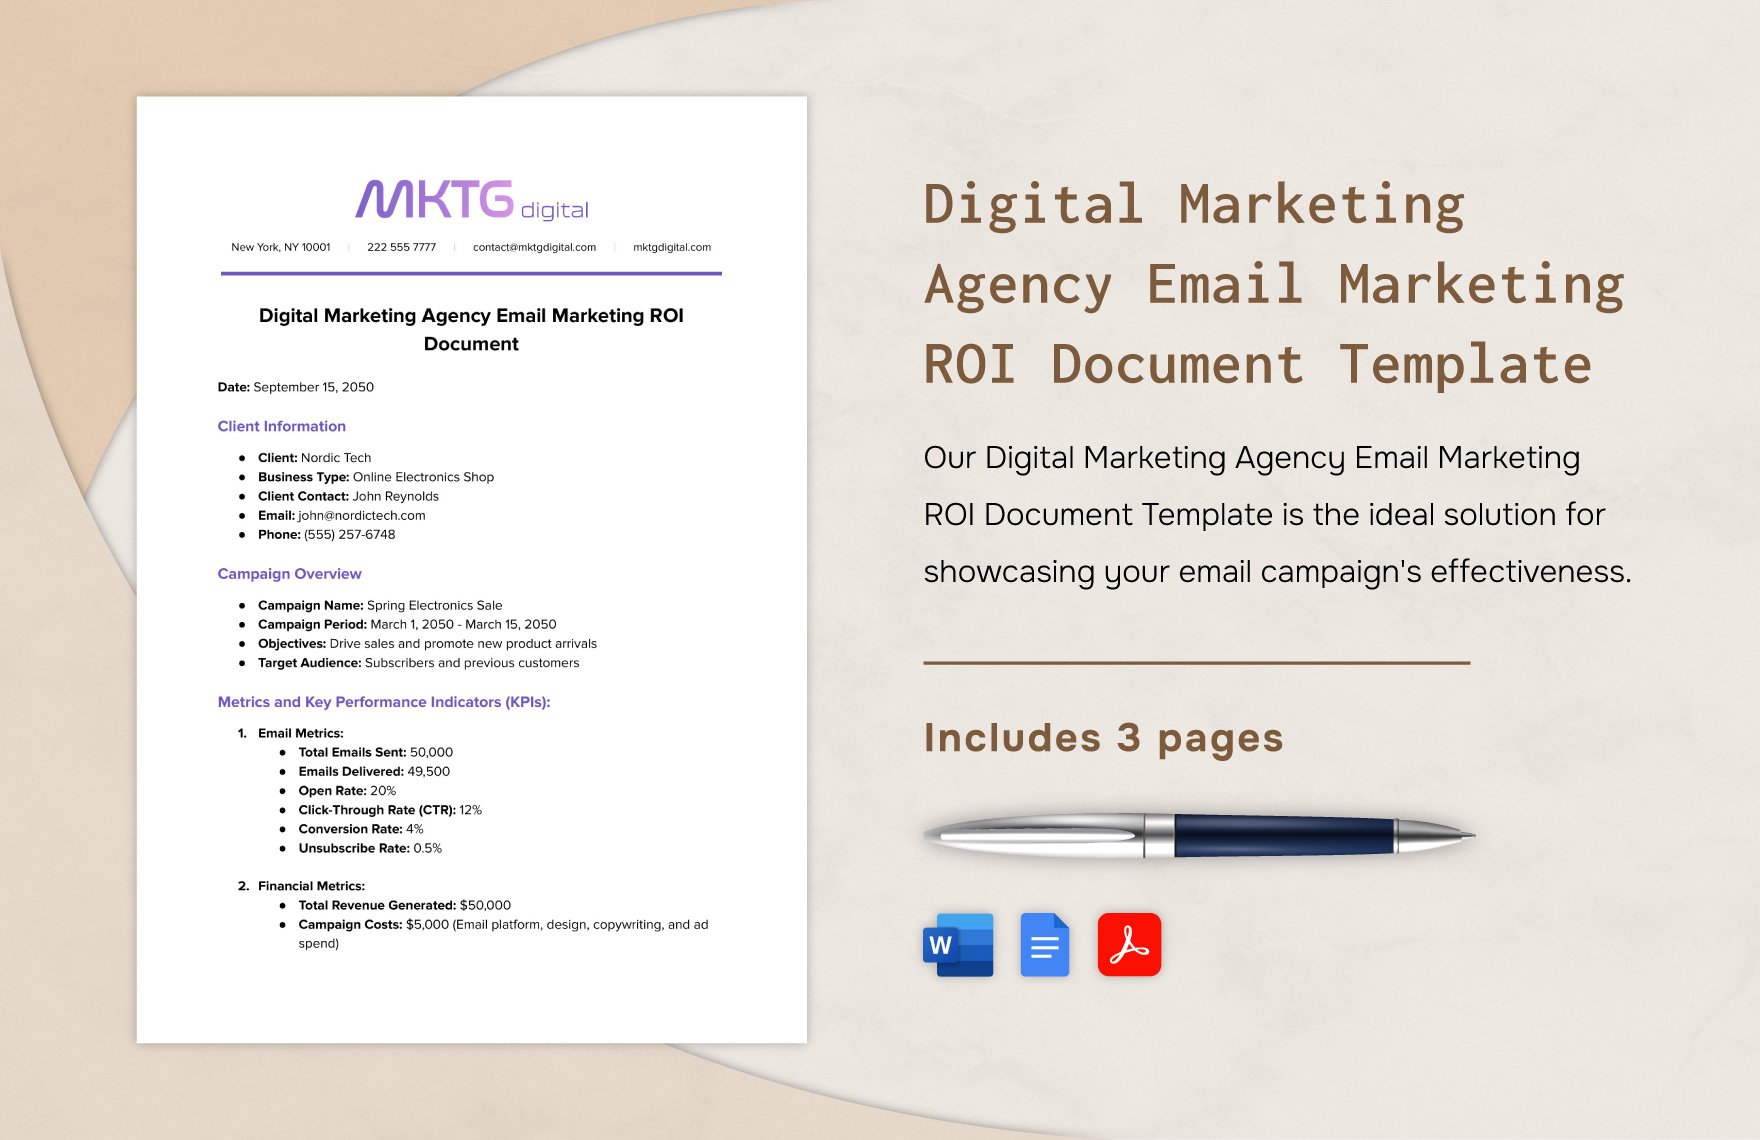 Digital Marketing Agency Email Marketing ROI Document Template